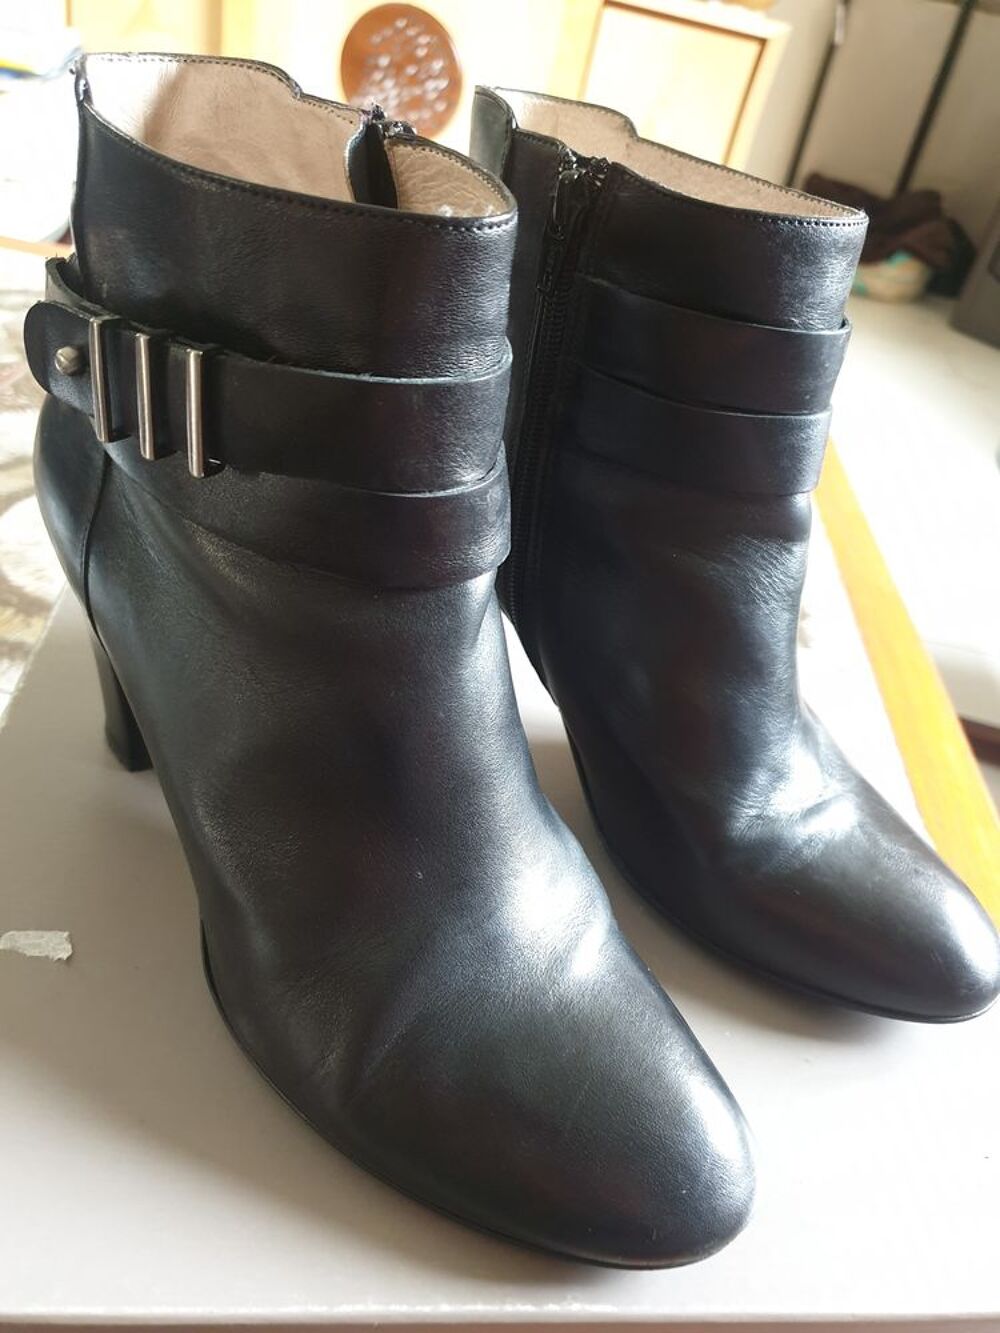 Boots San Marina en cuir lisse, T 39, talon 8 cm, TBEtat Chaussures